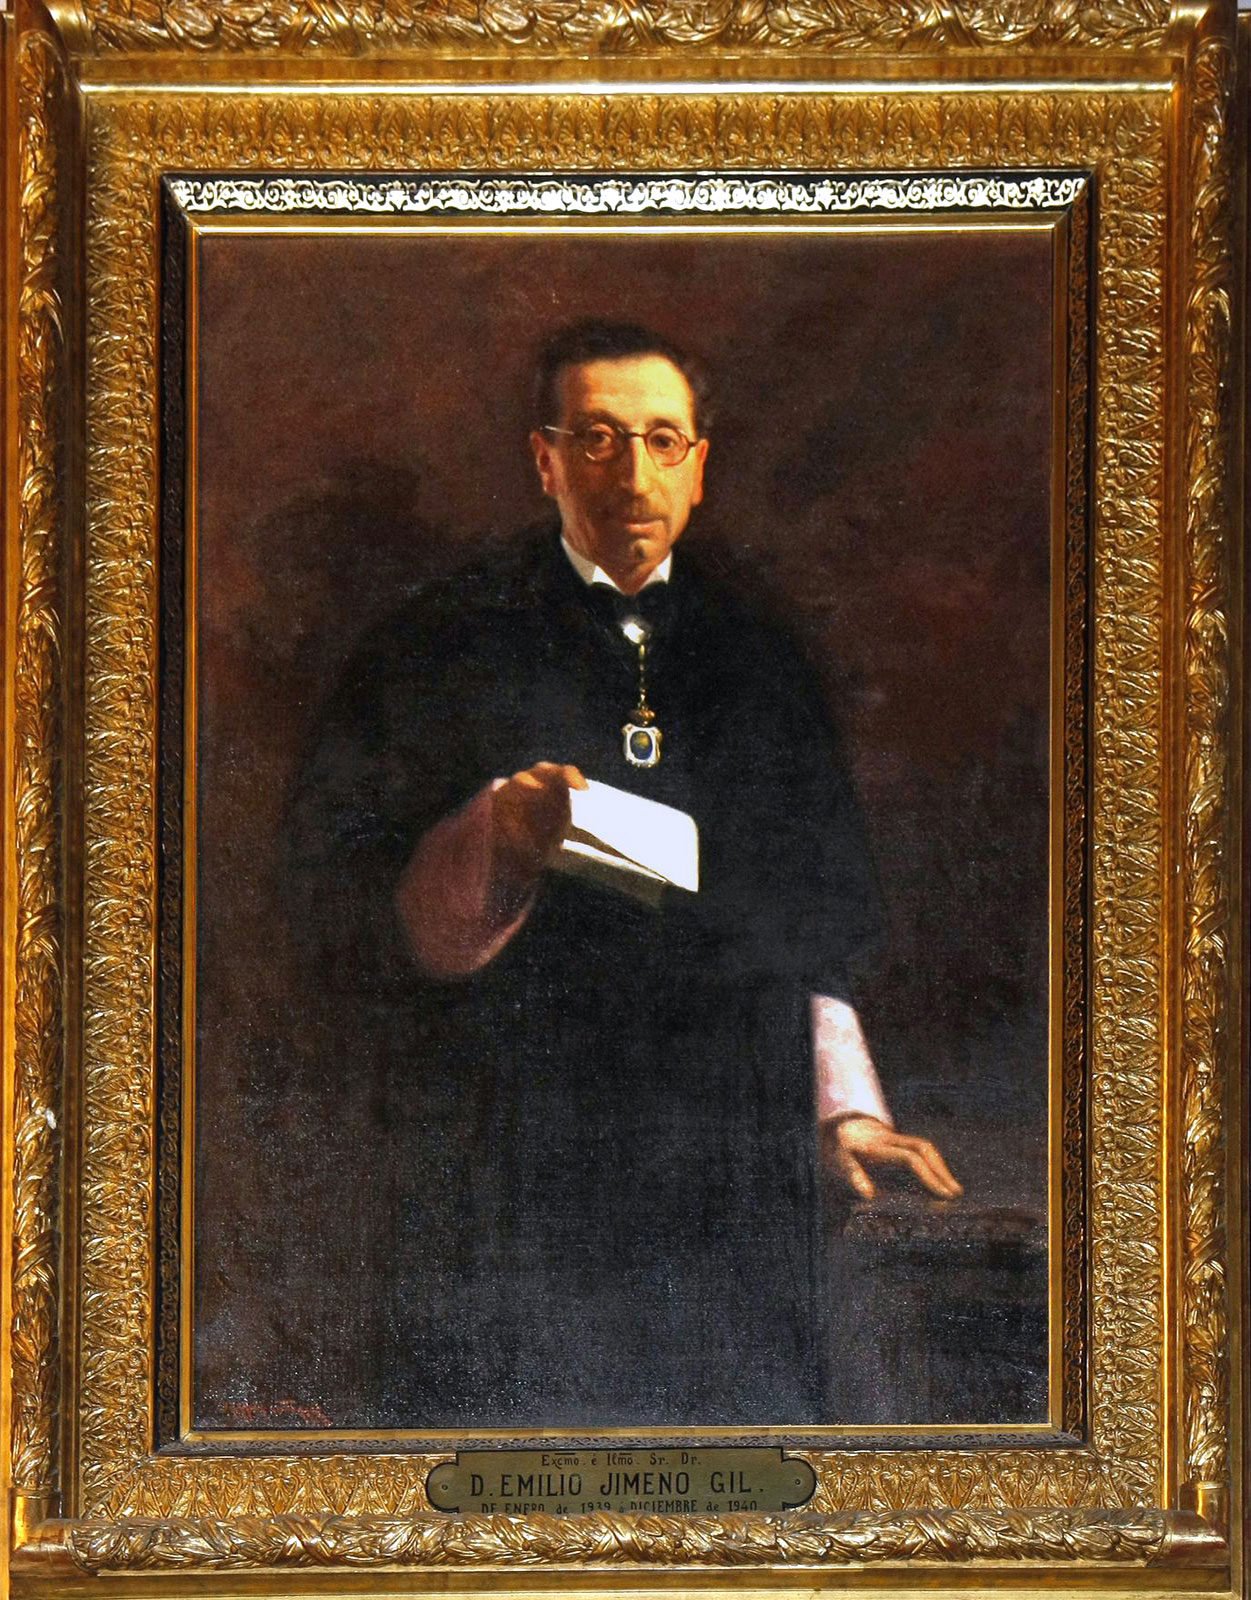 Retrat del rector Emilio Jimeno Gil